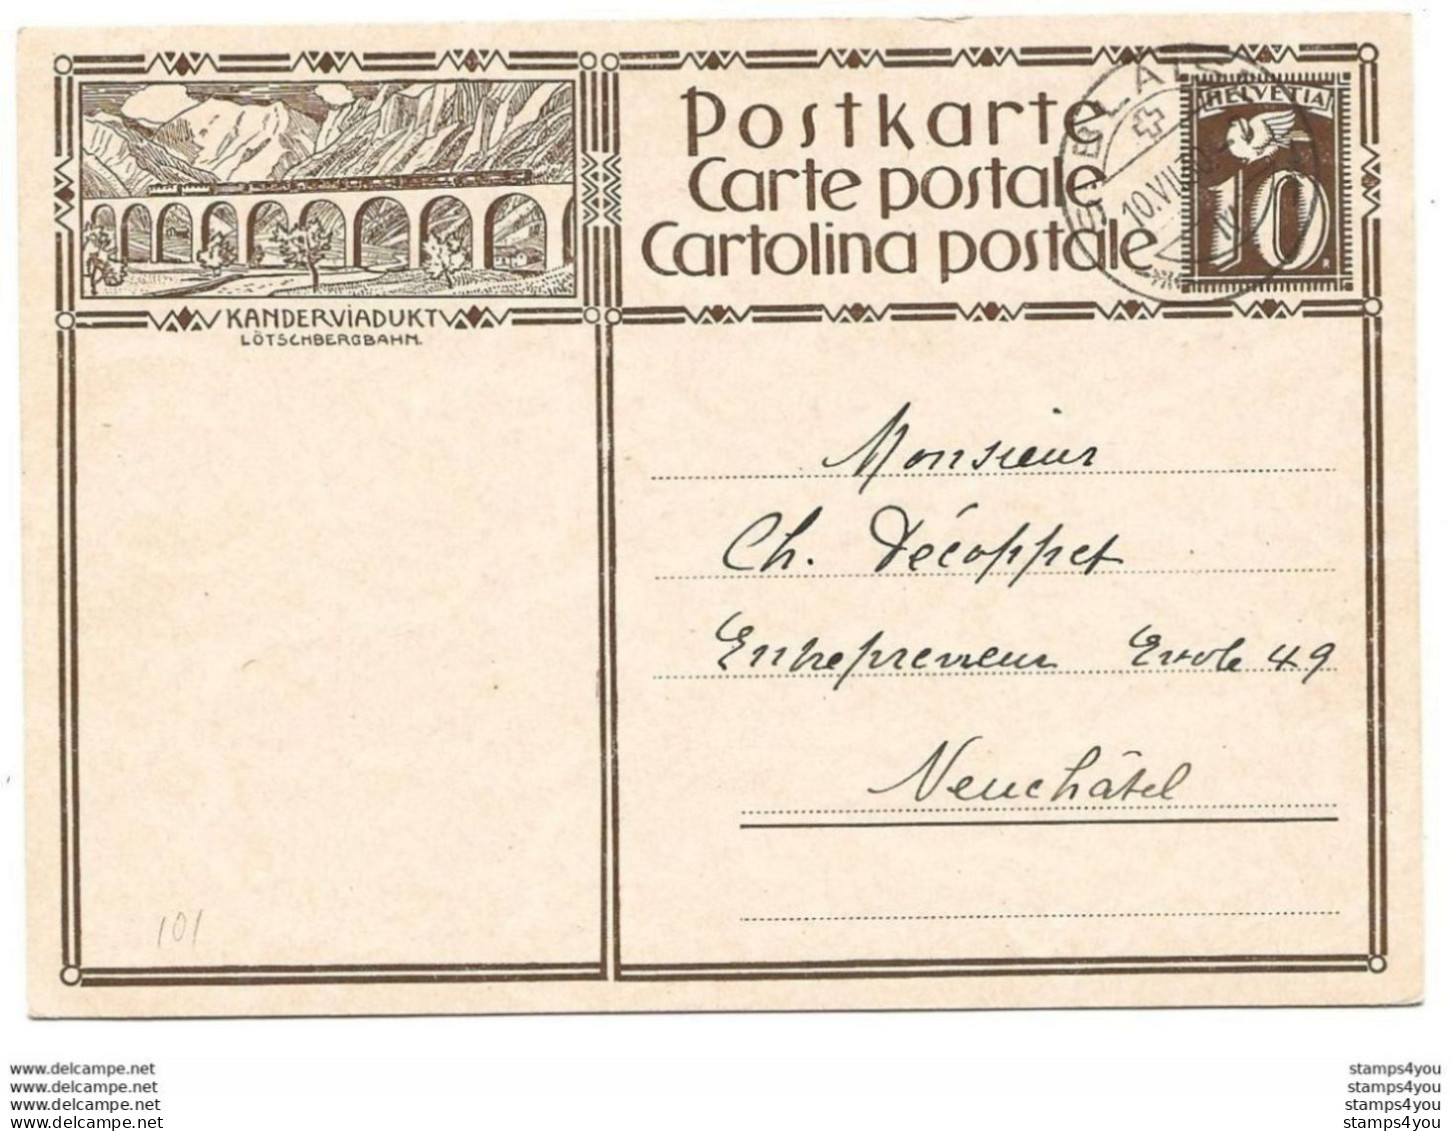 283 - 54 - Entier Postal Avec Illustration "Kanderviadukt" Cachet à Date 1930 - Stamped Stationery